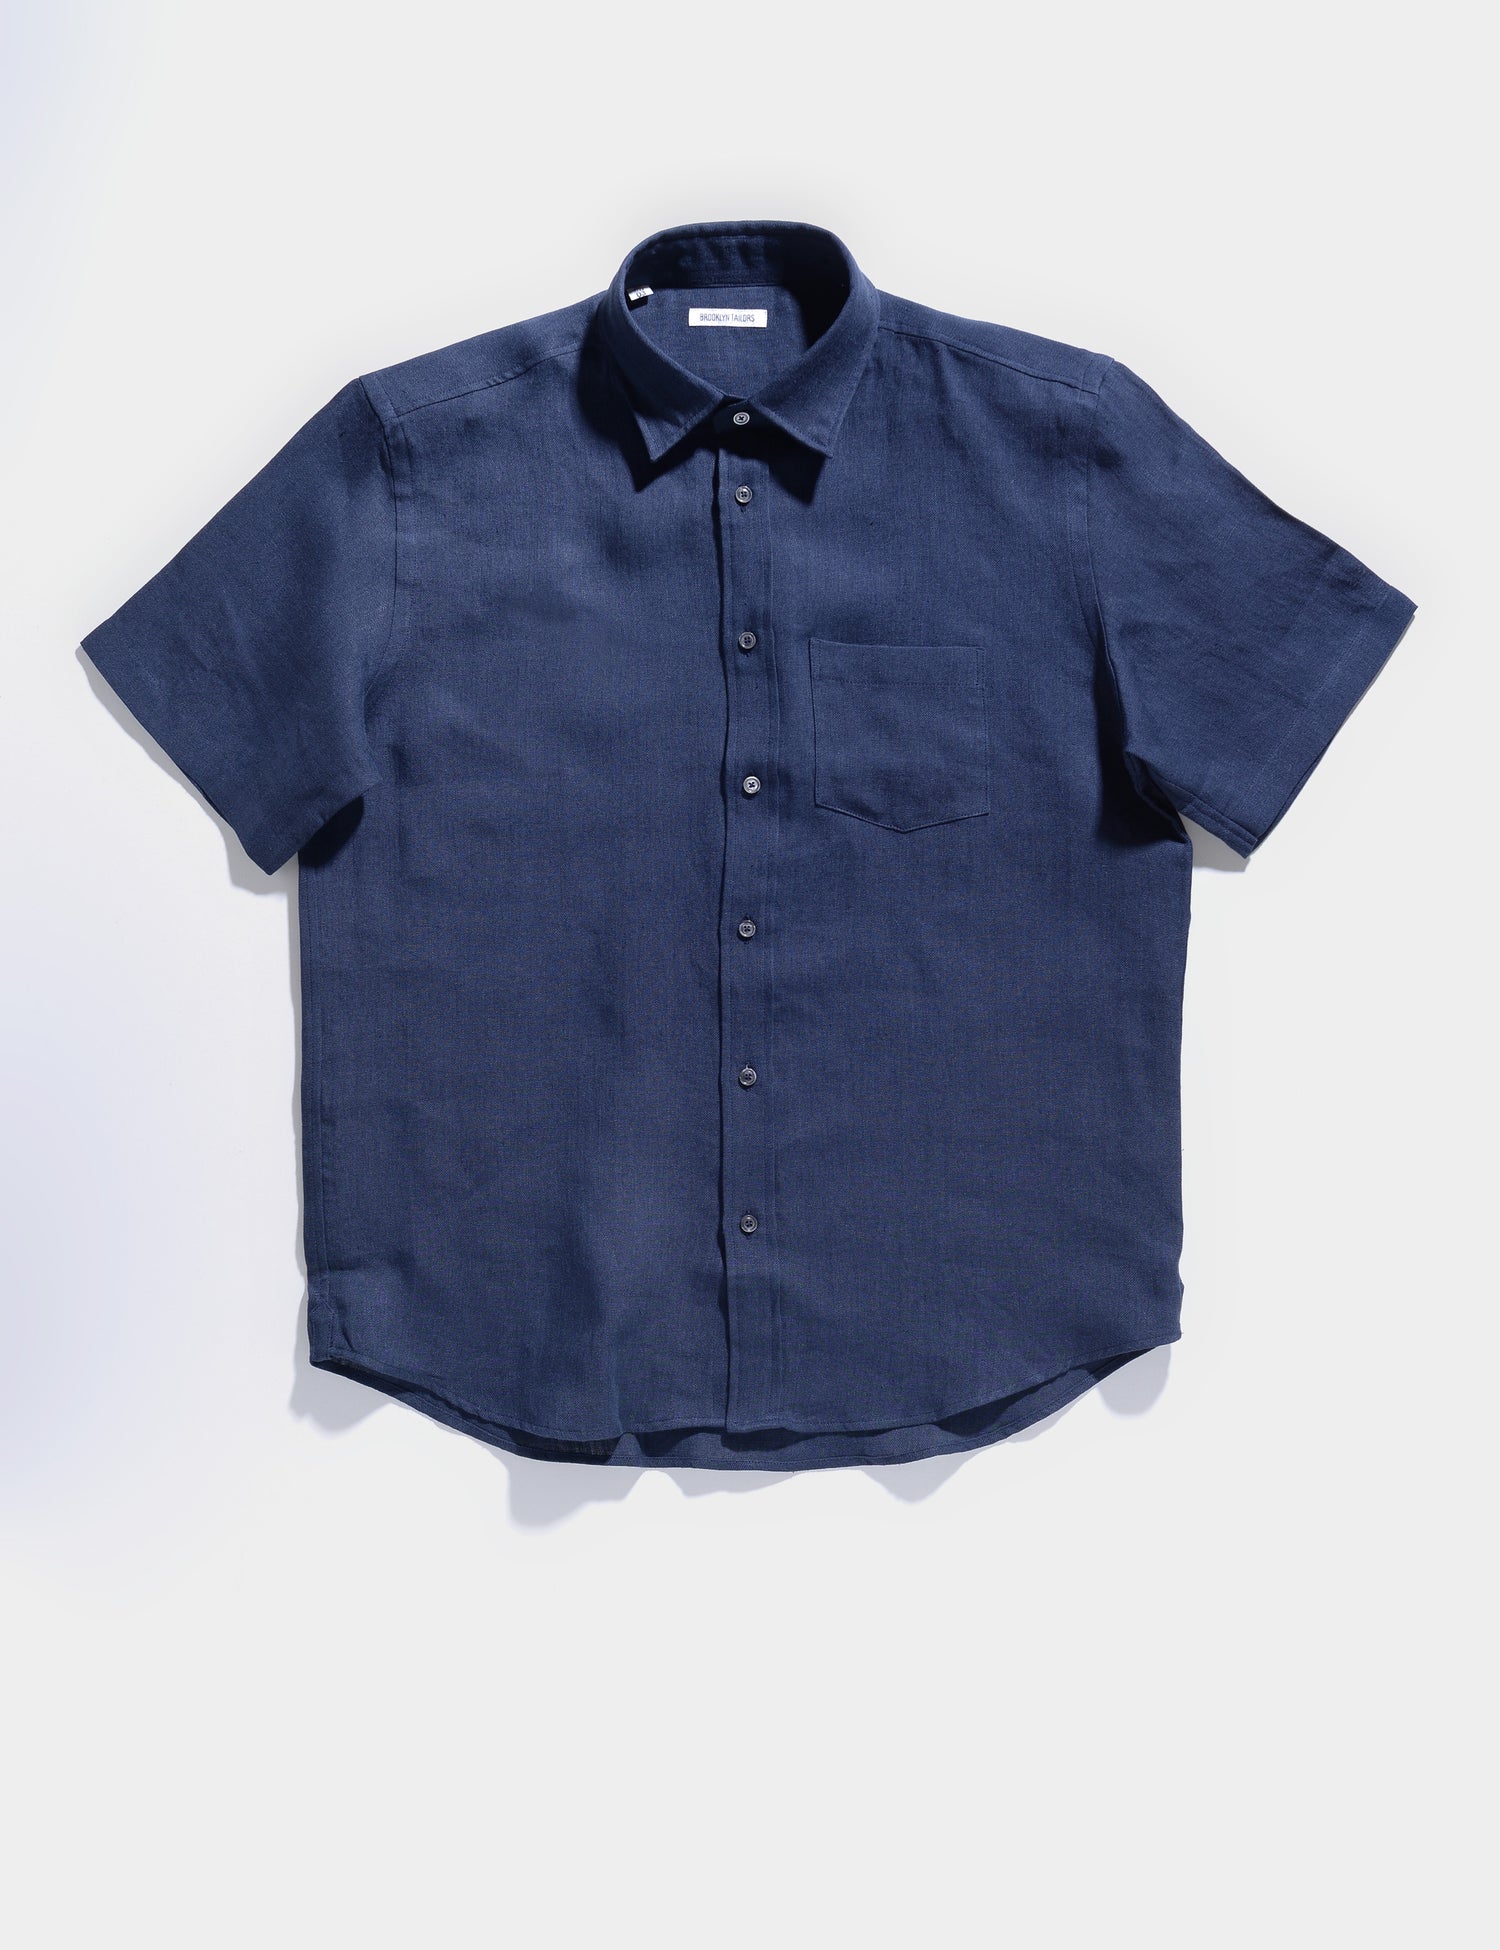 Brooklyn Tailors BKT14 Short Sleeved Casual Shirt in Linen Twill - Salerno Blue full length flat shot